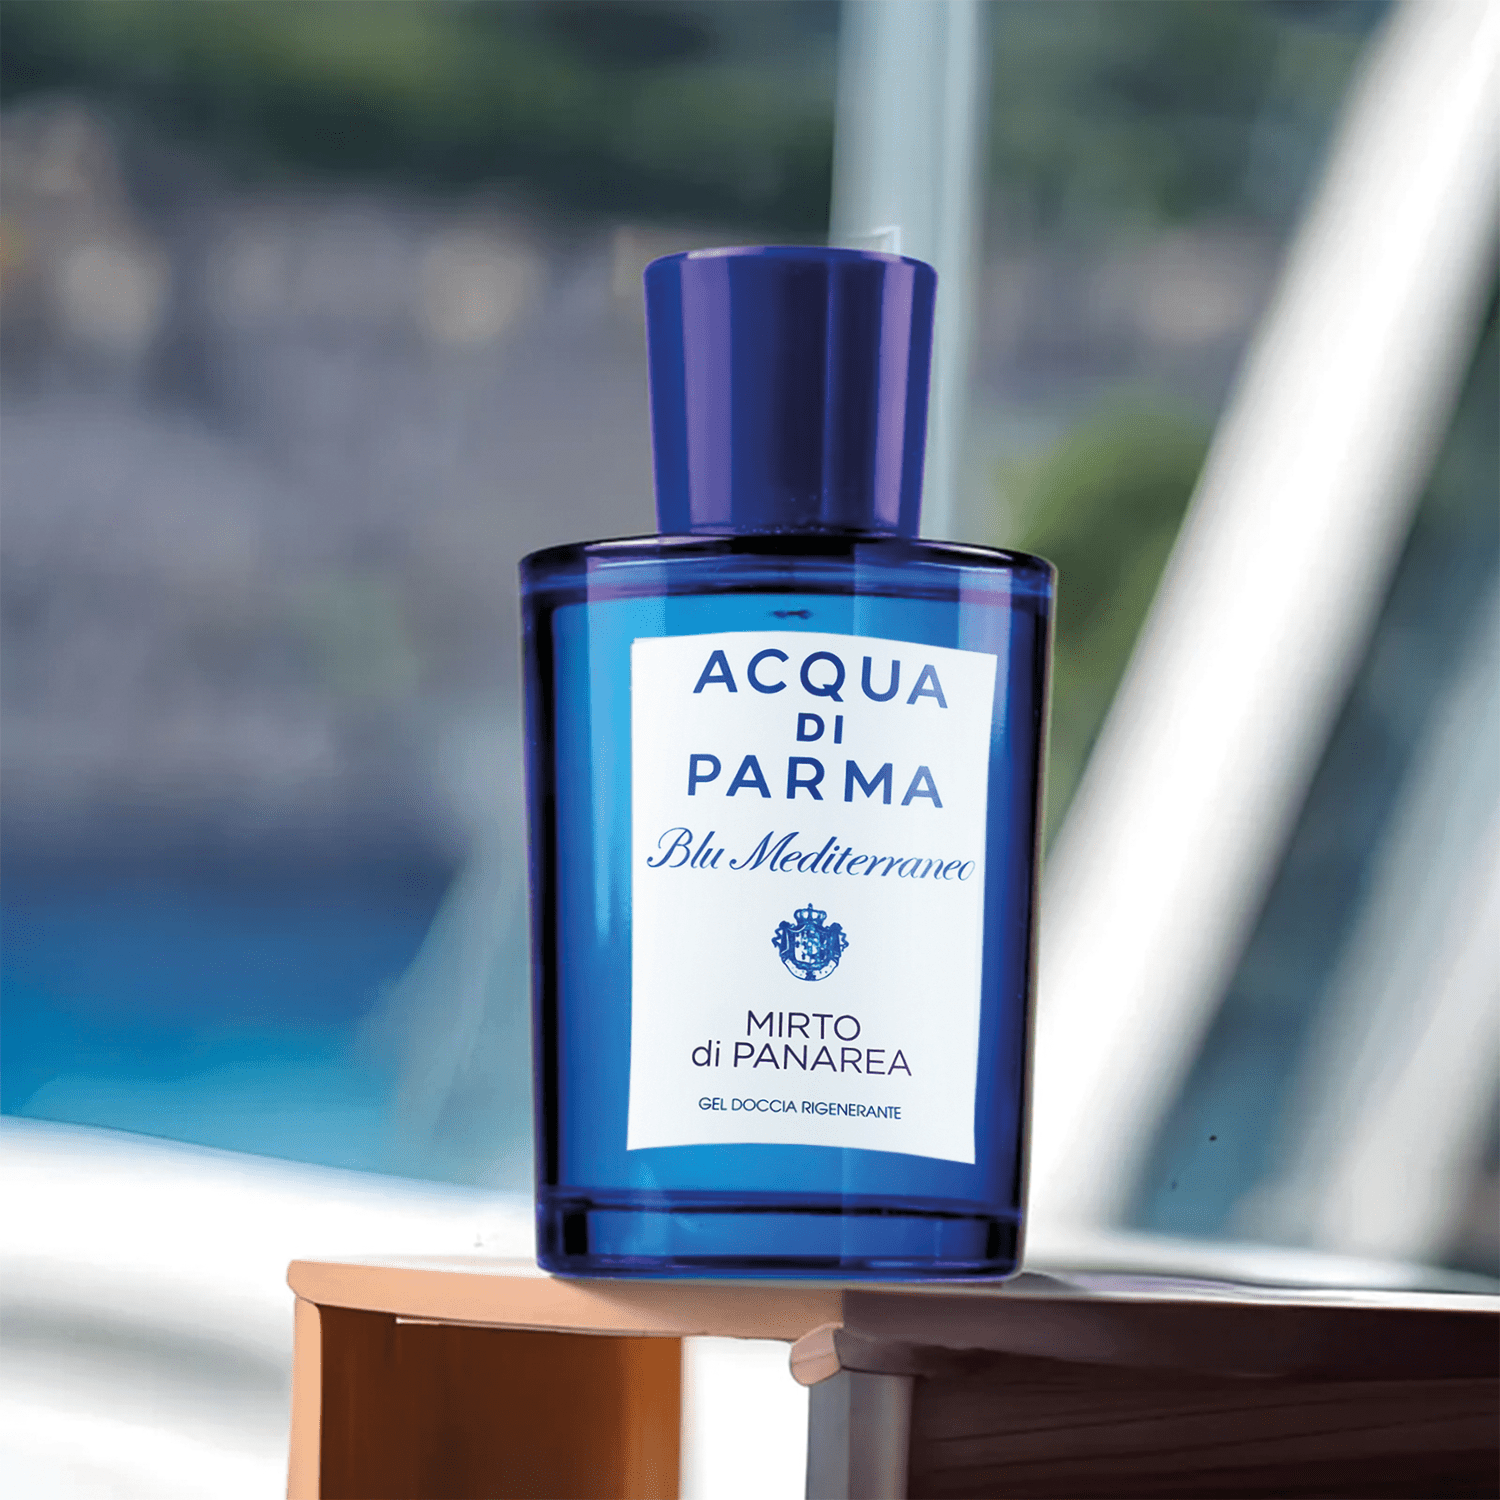 Acqua Di Parma Blu Mediterraneo Mirto Di Panarea Shower Gel | My Perfume Shop Australia